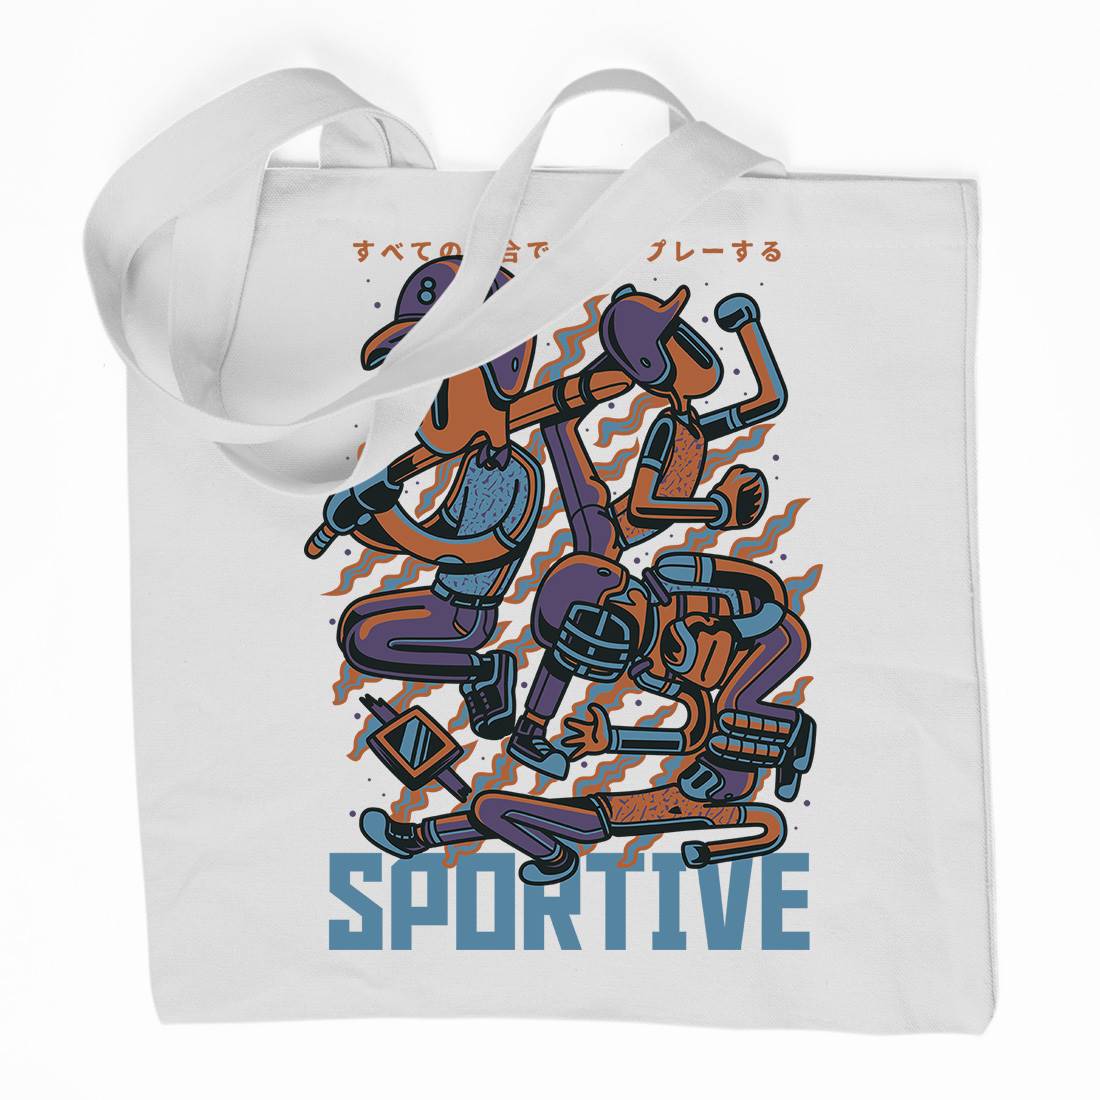 Sportive Organic Premium Cotton Tote Bag Sport D831